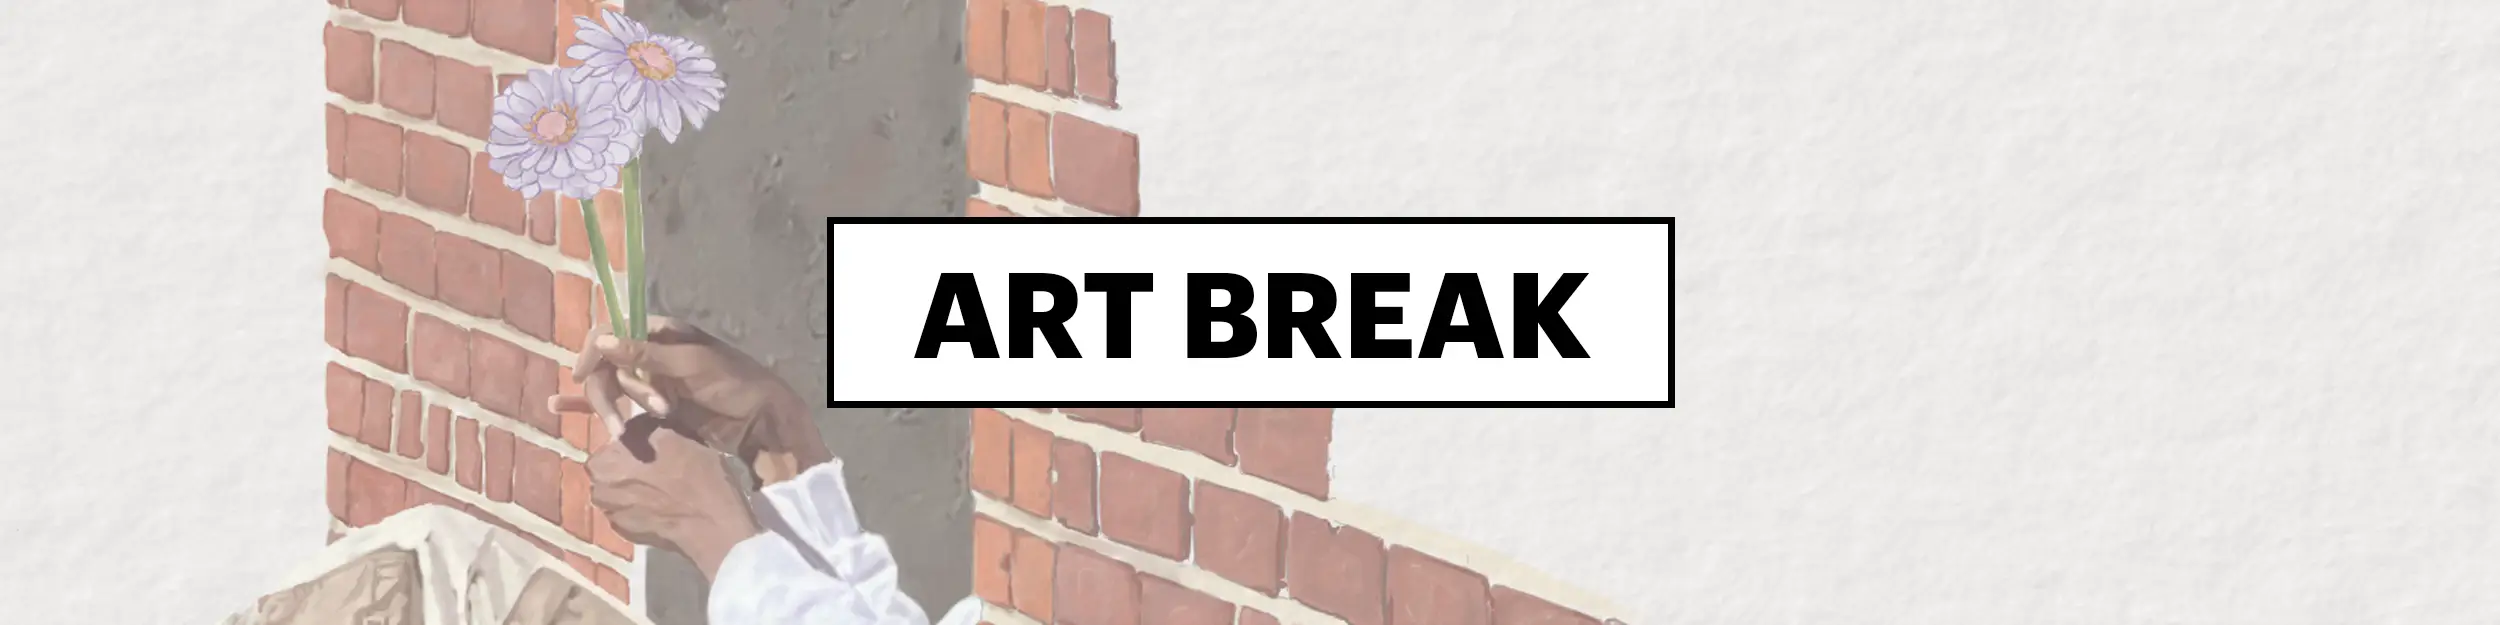 Art Break text sitting atop digital artwork of man's leg coming out of brick wall